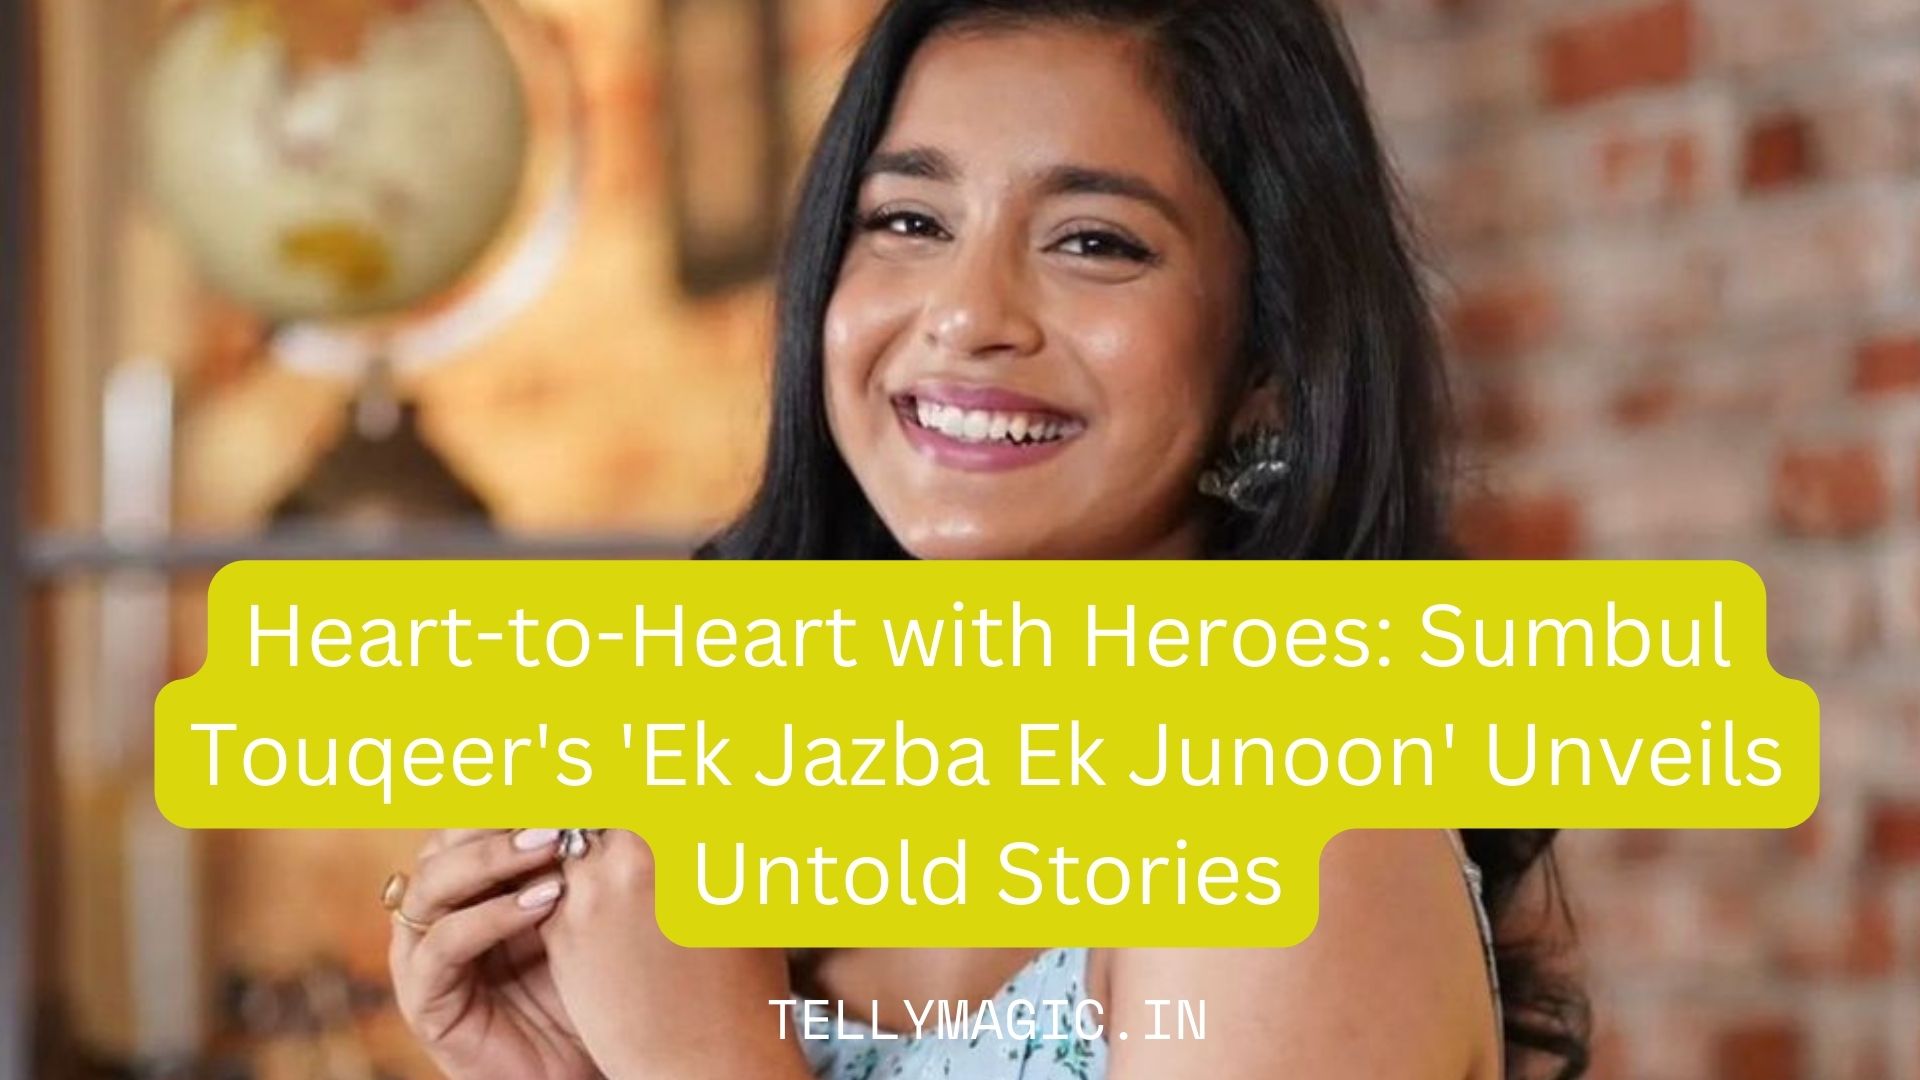 Heart-to-Heart with Heroes: Sumbul Touqeer’s ‘Ek Jazba Ek Junoon’ Unveils Untold Stories